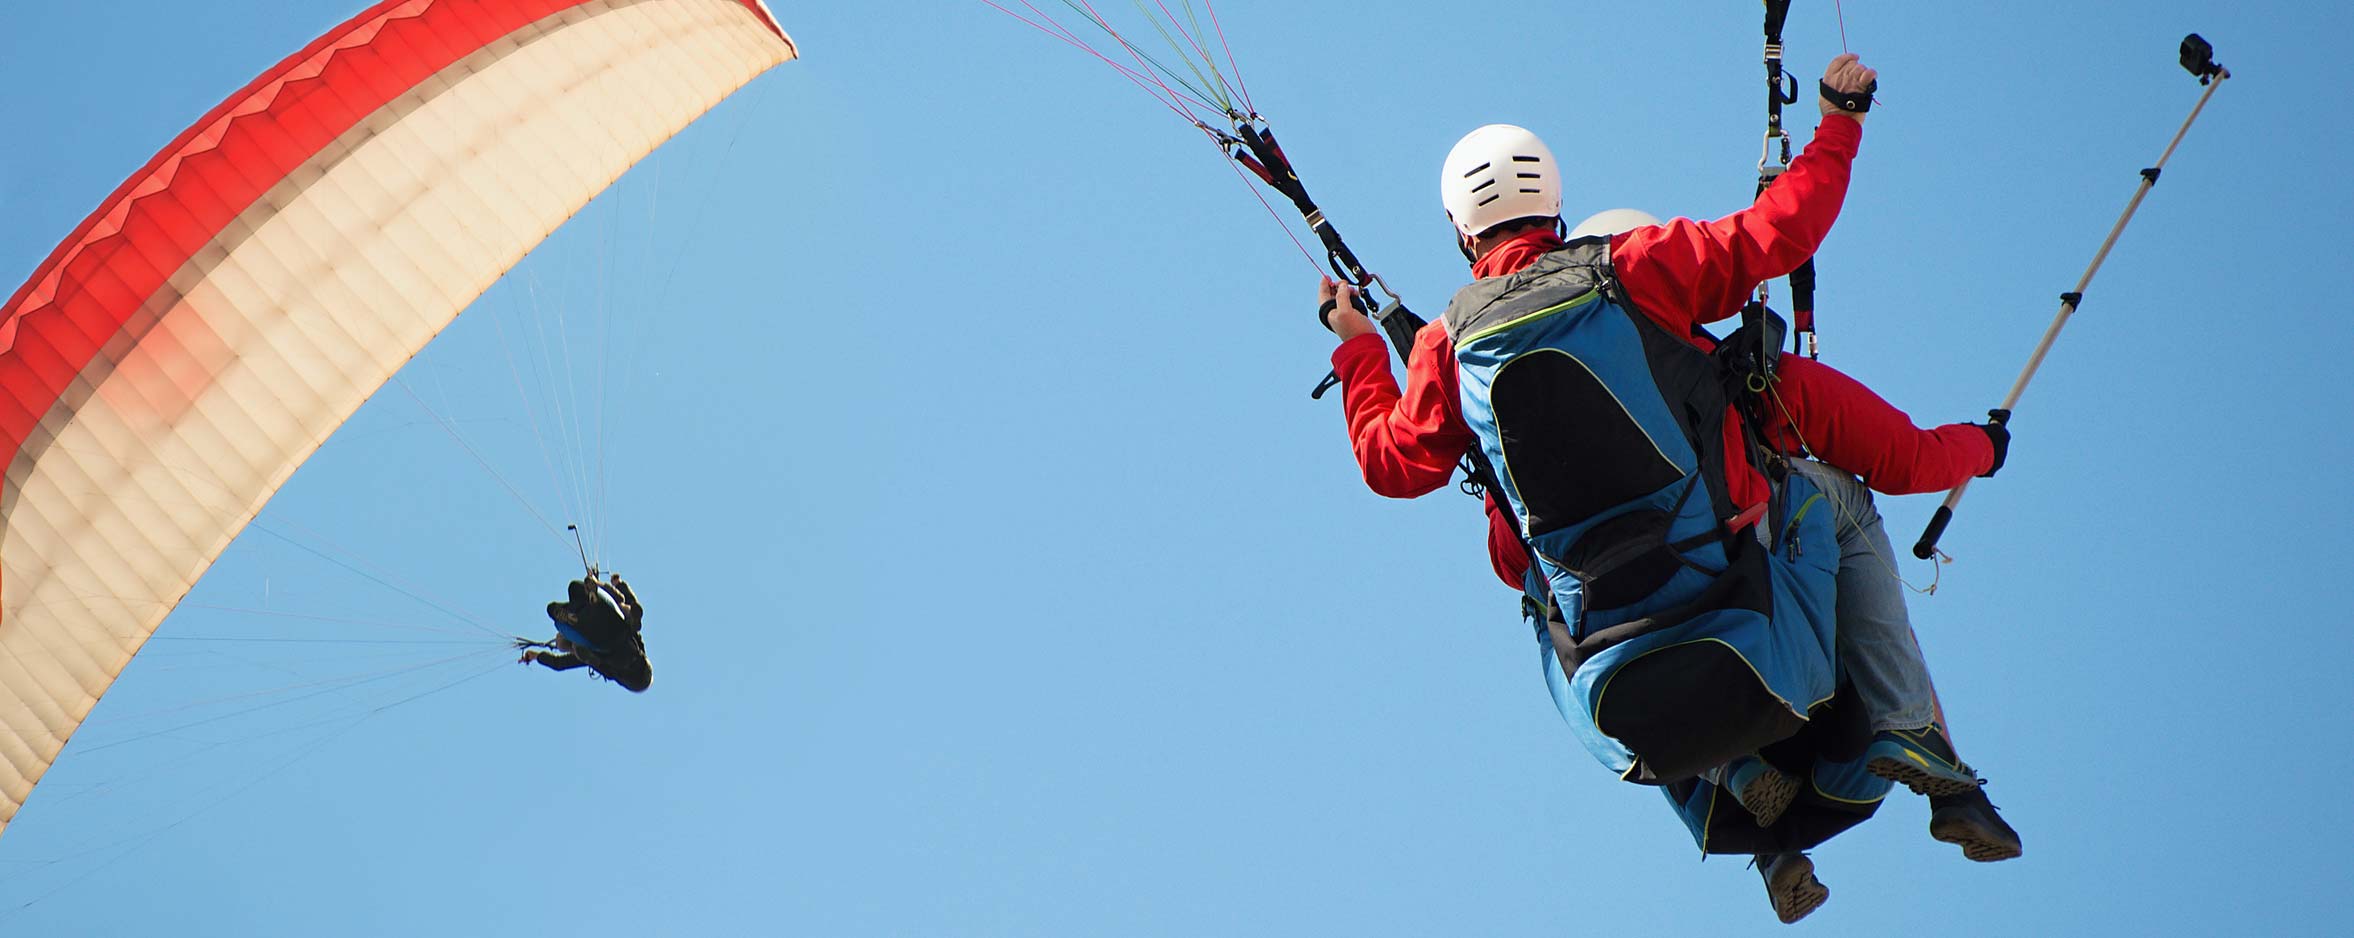 Tandem Paragliding in Styria, Austria - TUI BLUE Blog